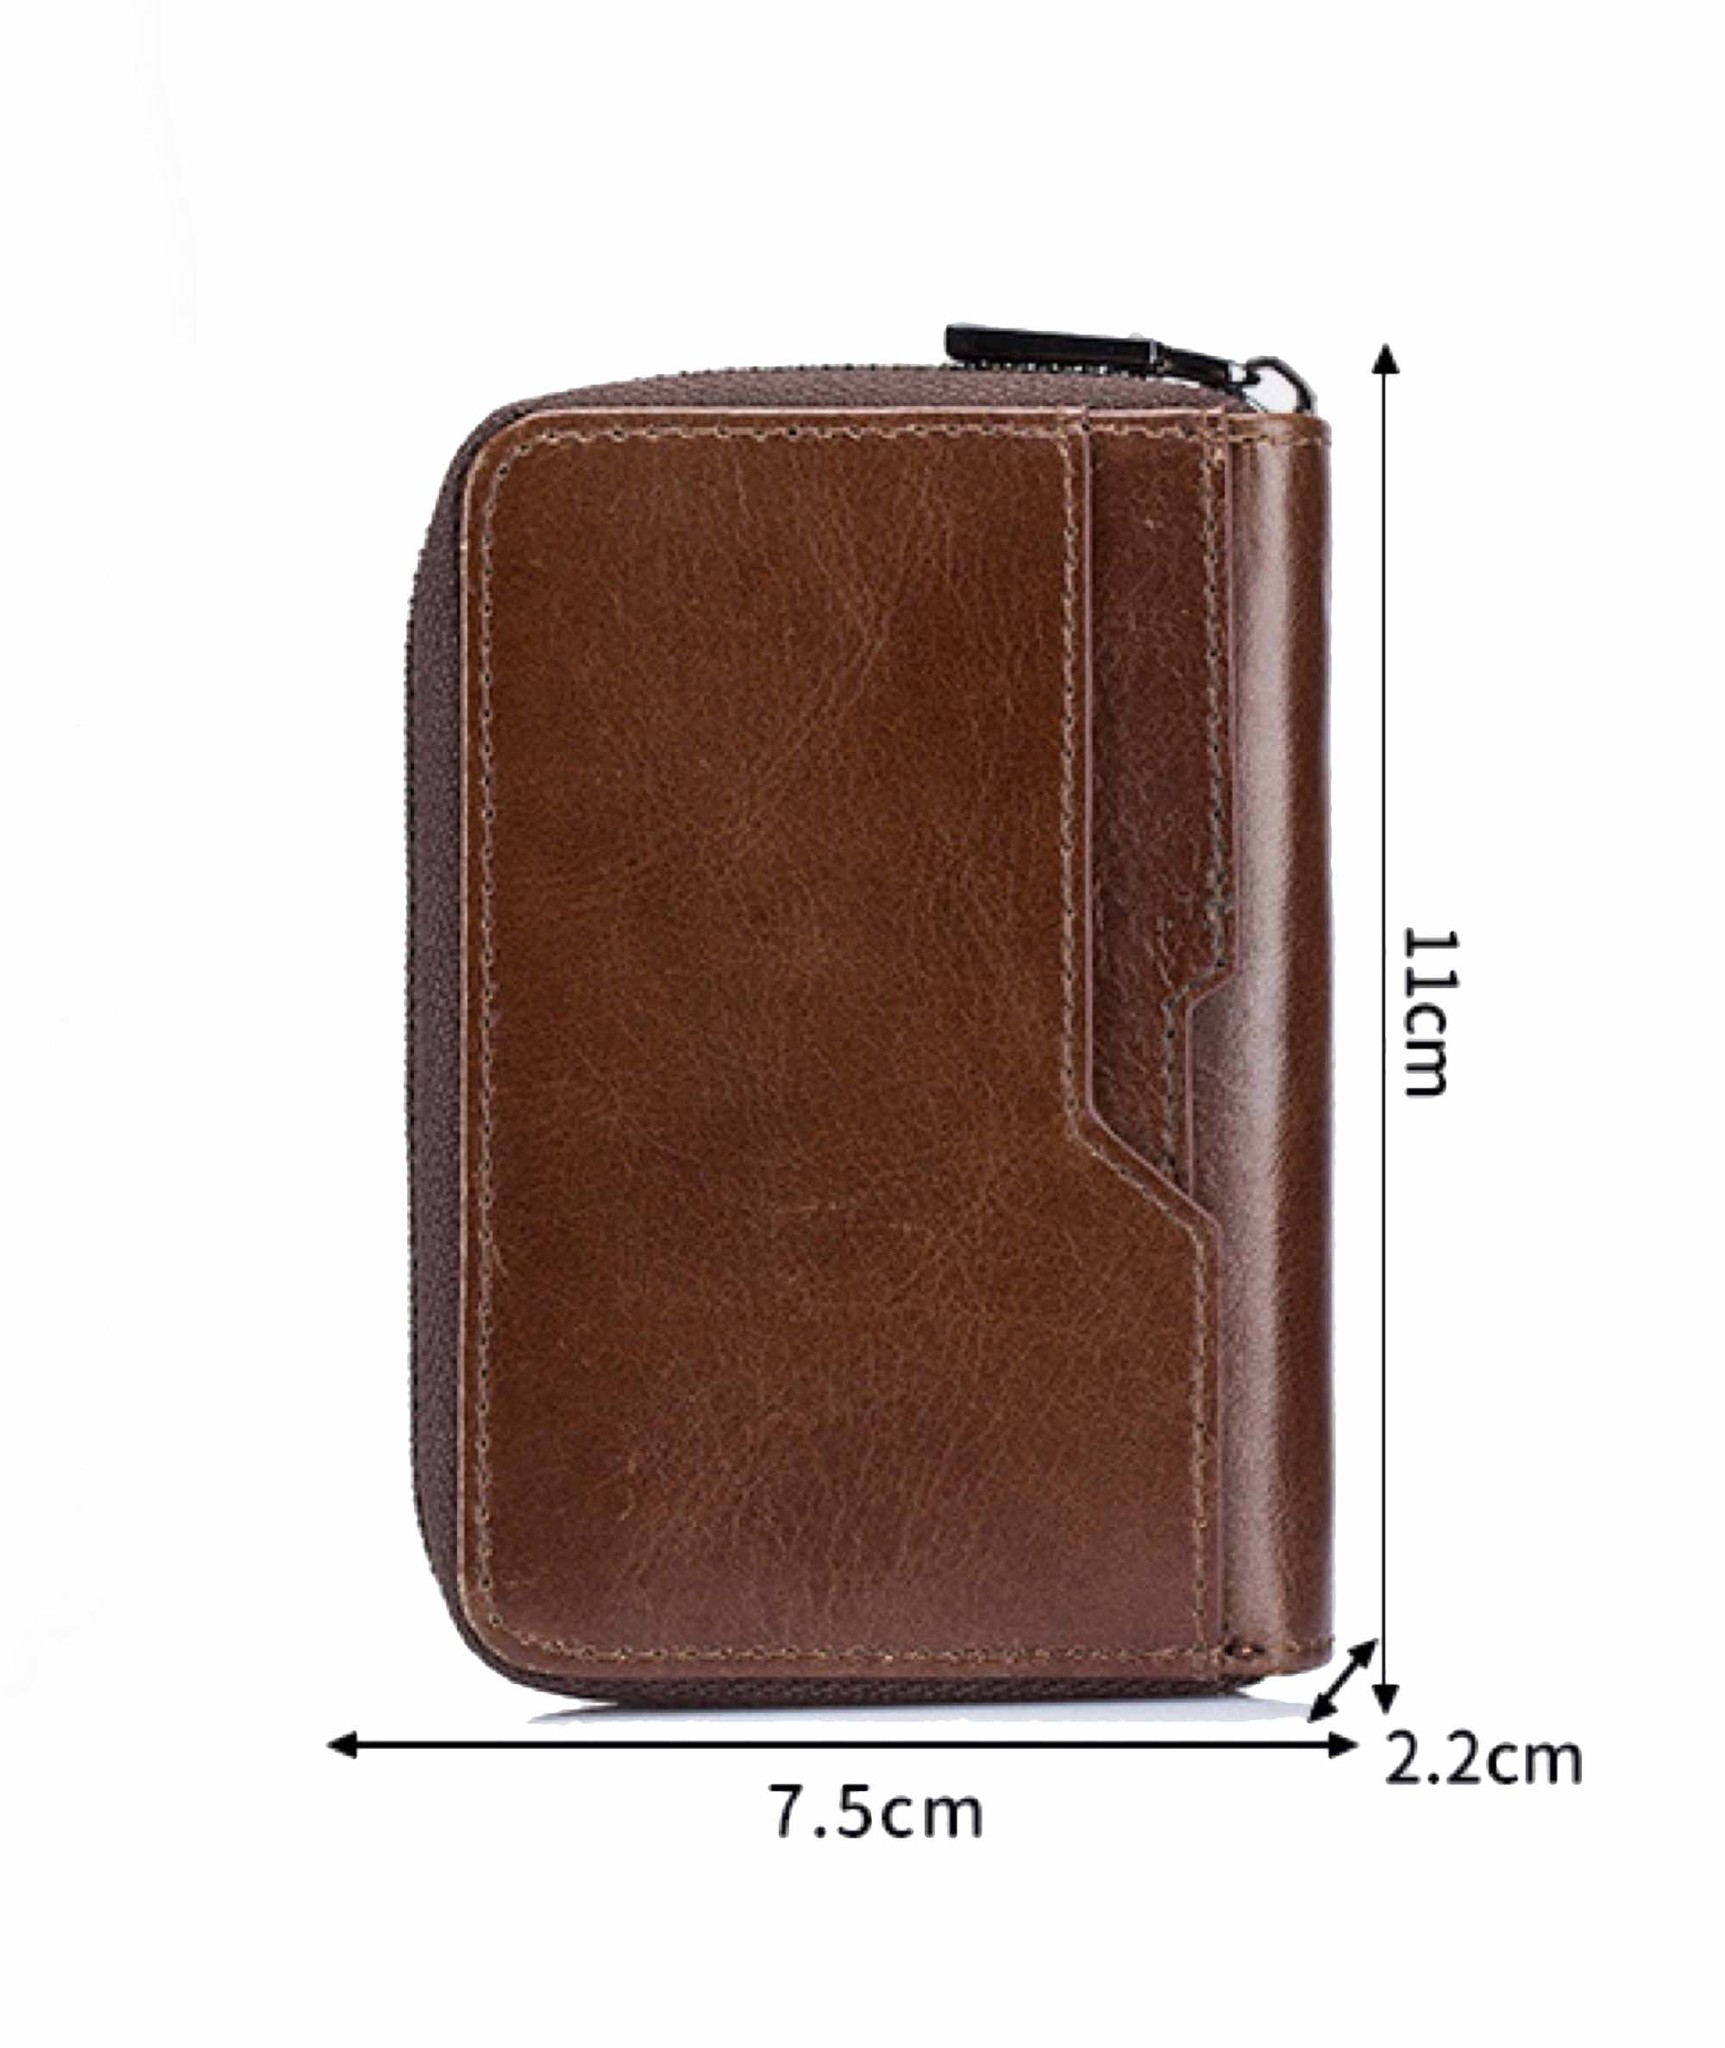 Minimalist Wallet for Men, Leather, RFID Blocking, Card Holder and Money Clip -Dark Brown-6